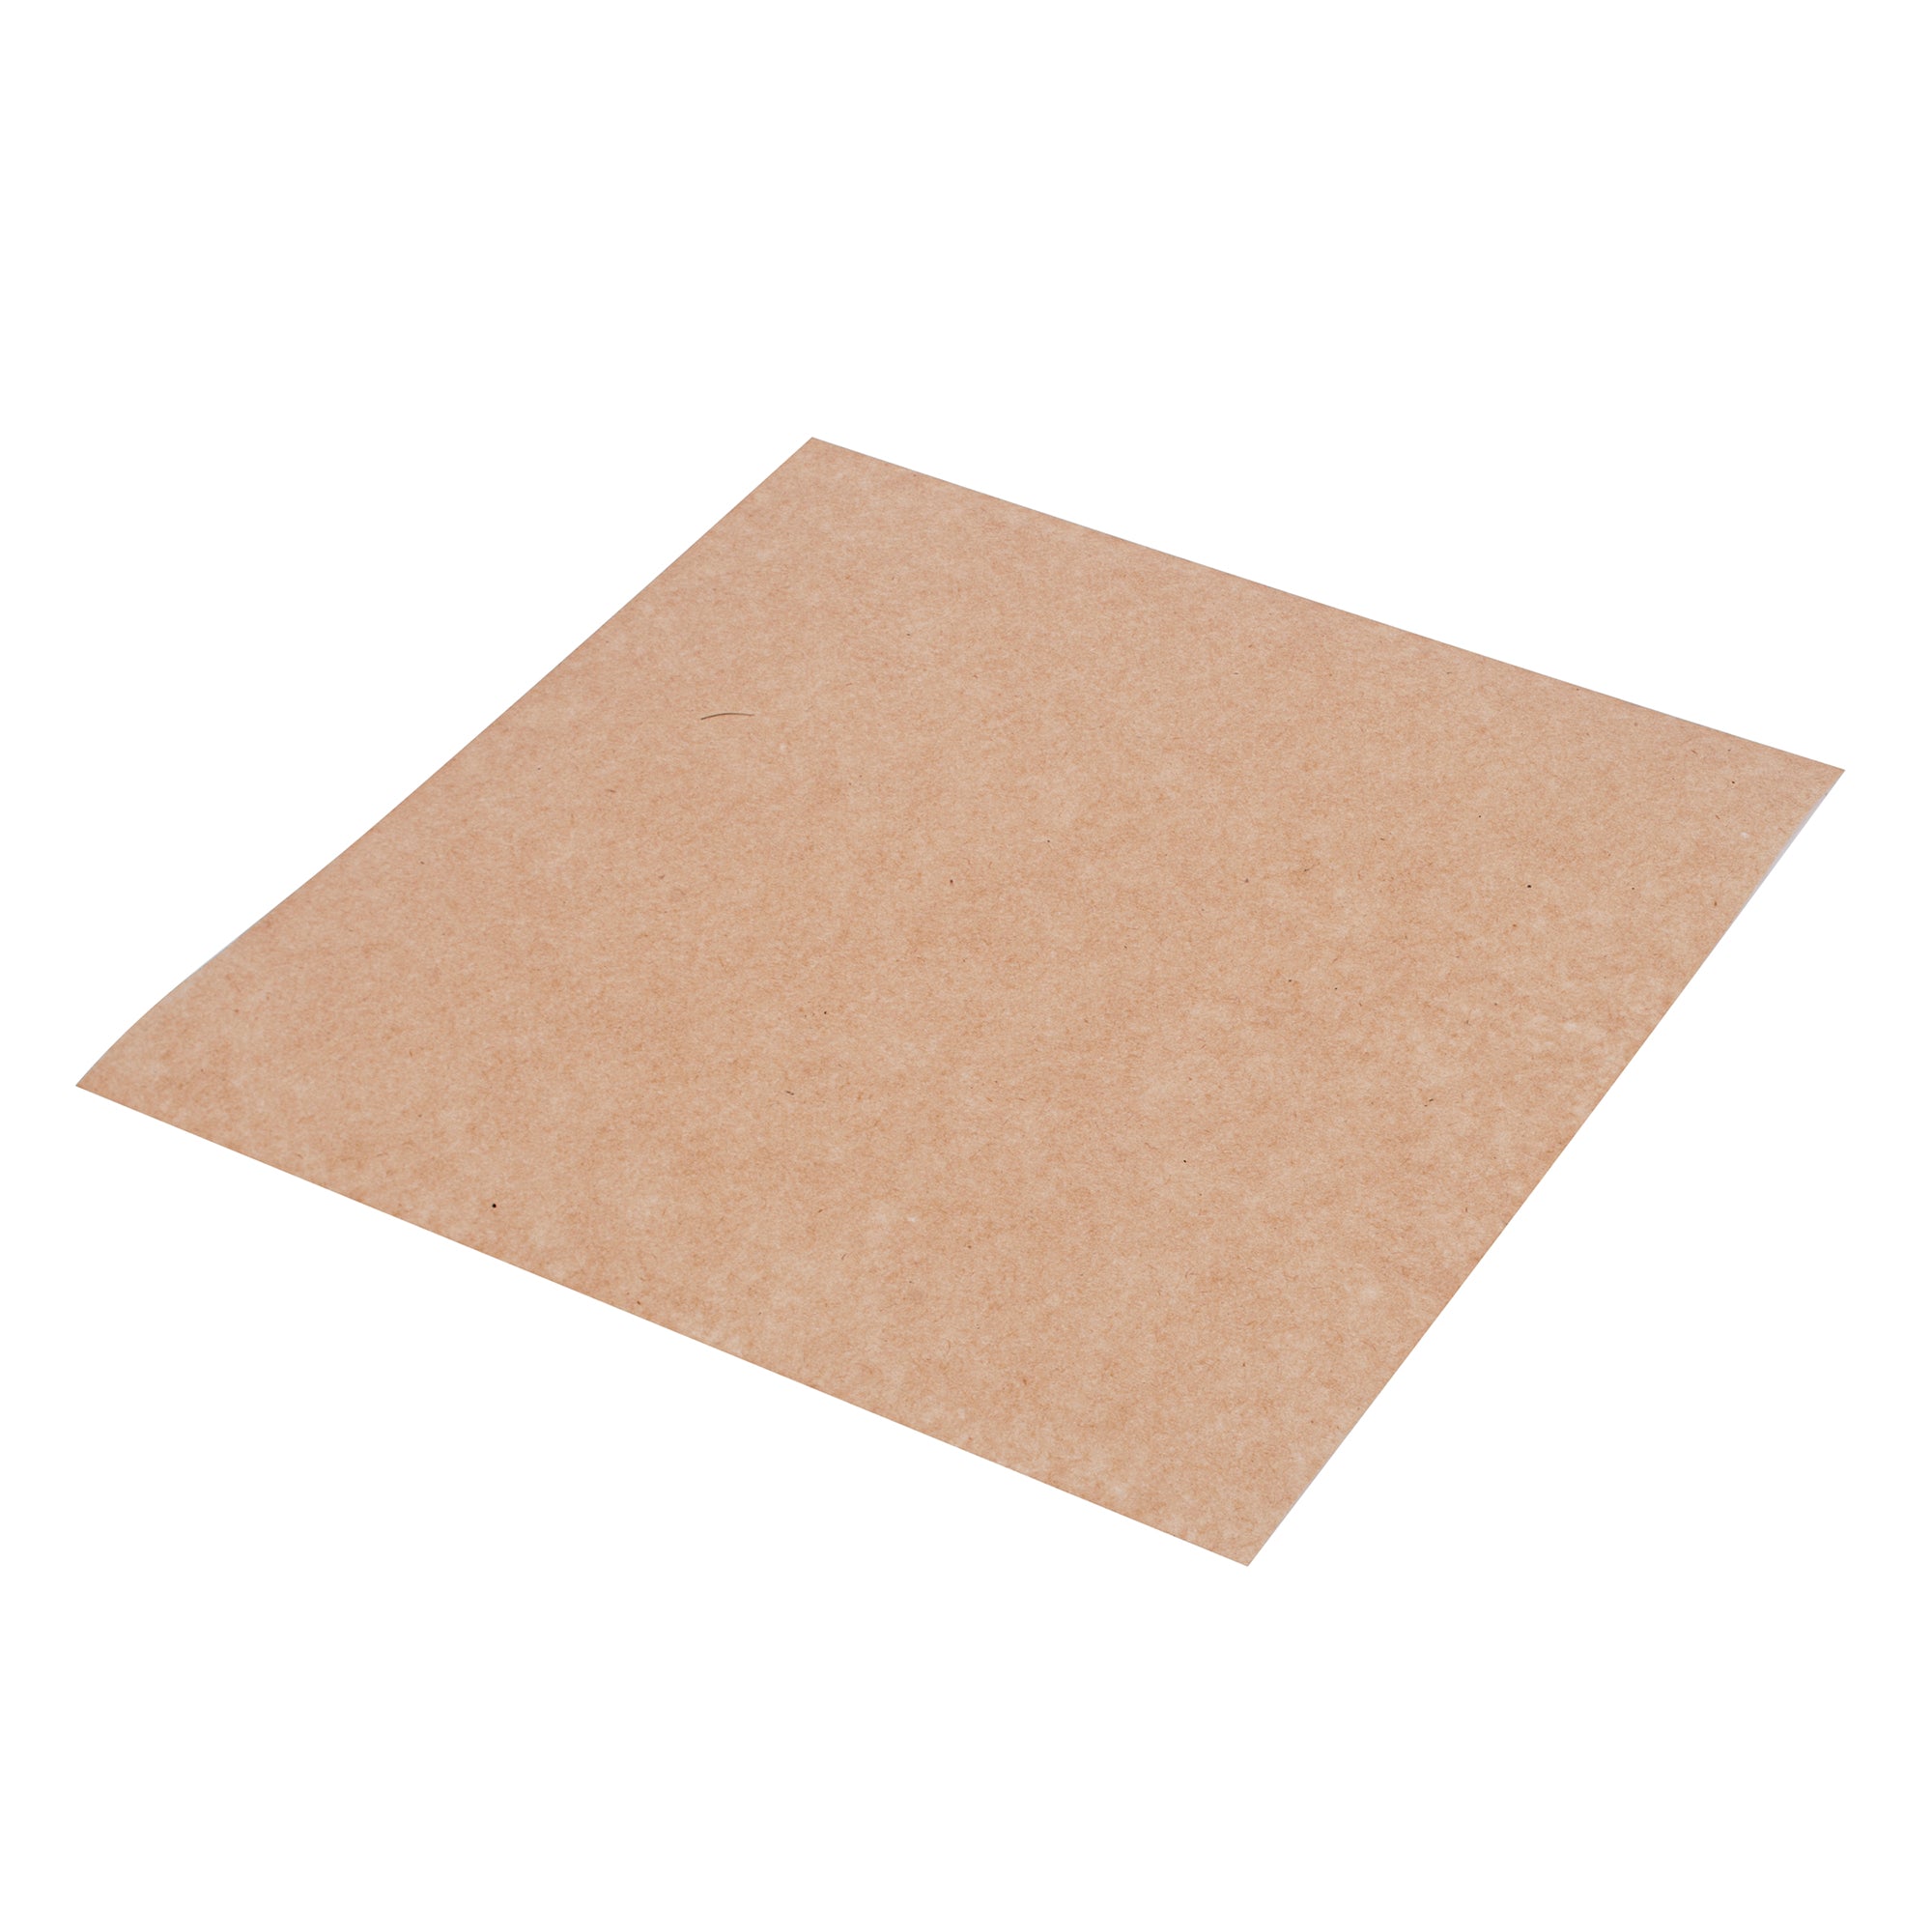 EVOLV | Parchment Squares | Unrefined & Extra-Slick Sheets | 5"x5" | 500 Count